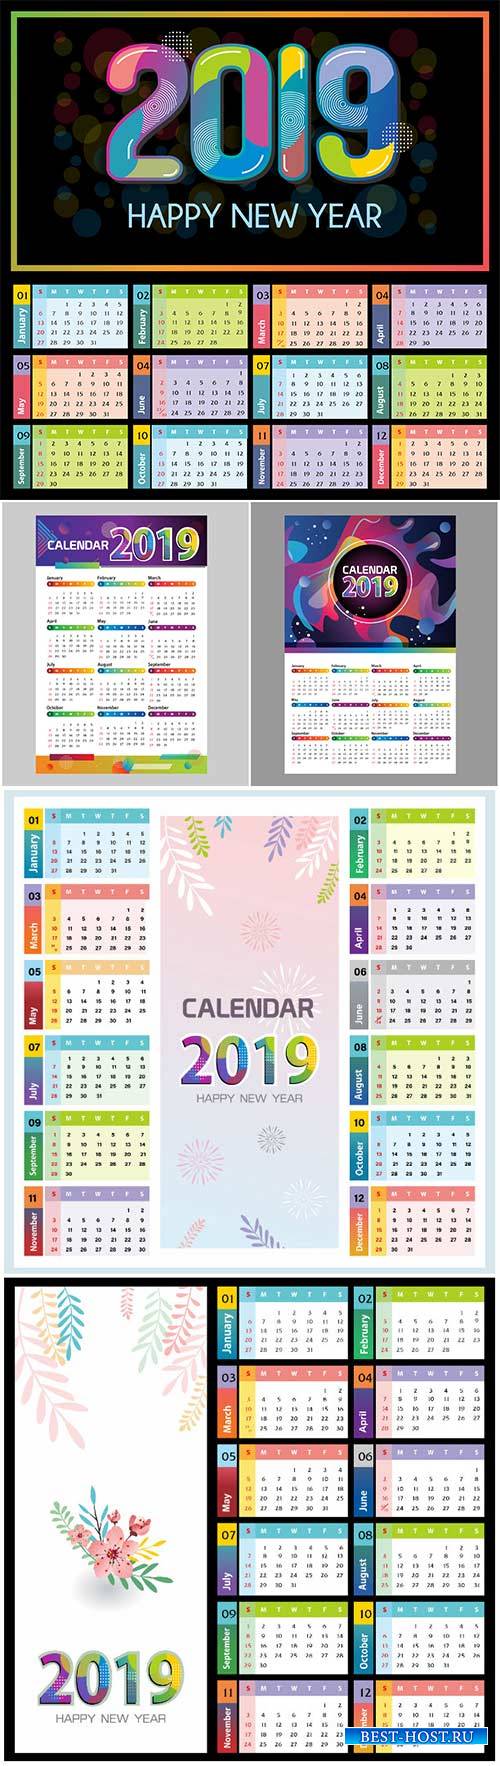 2019 calendar vector design template